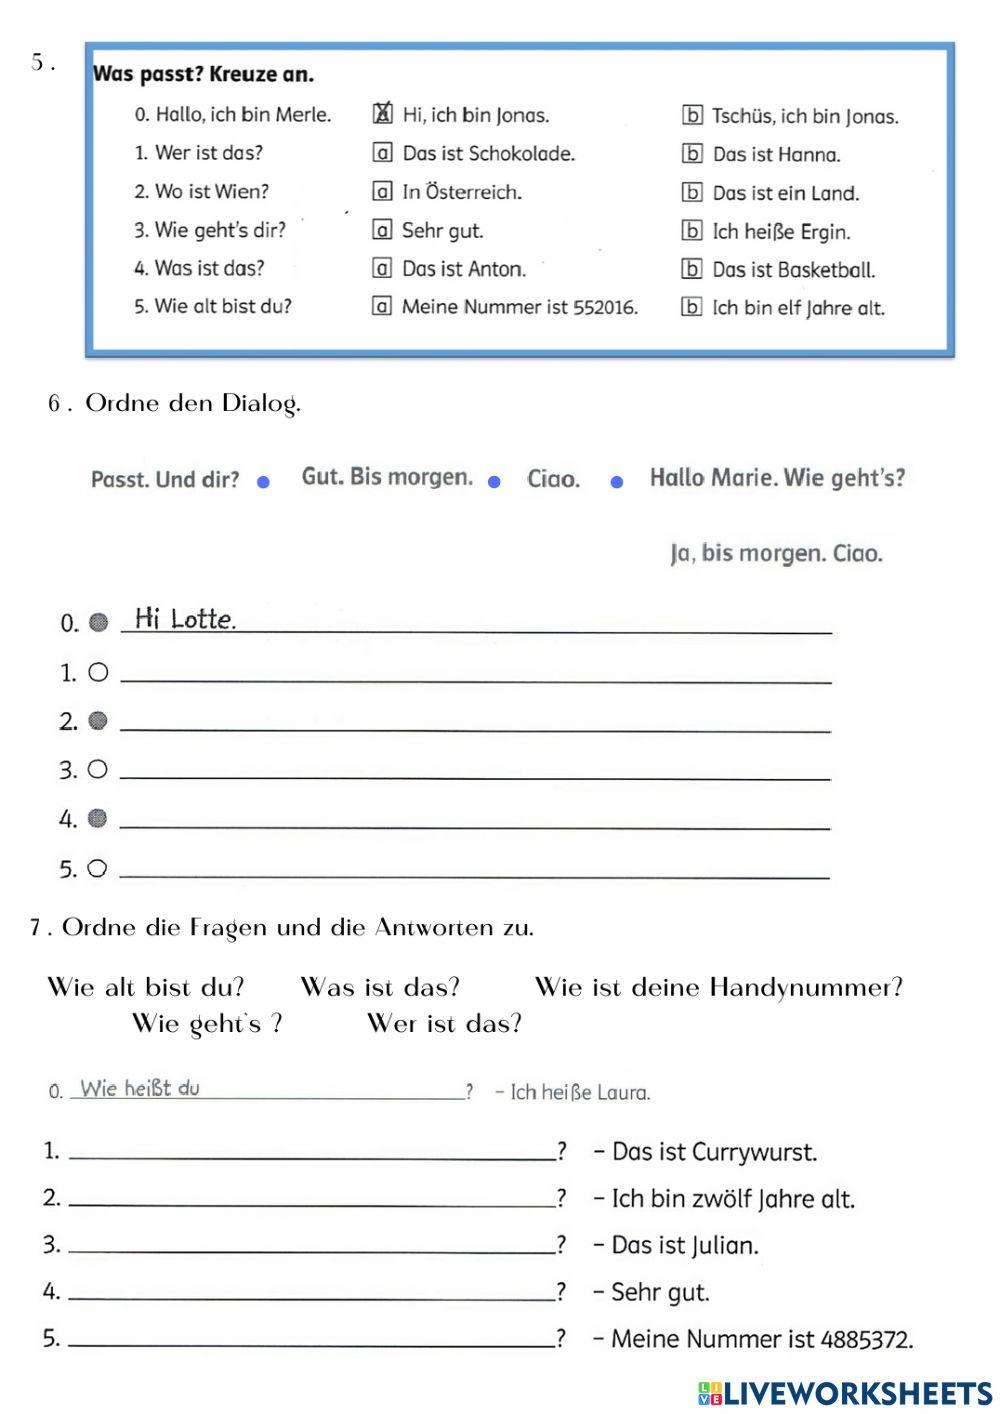 Deutsch Klasse ! A1 Test Lektioon 1